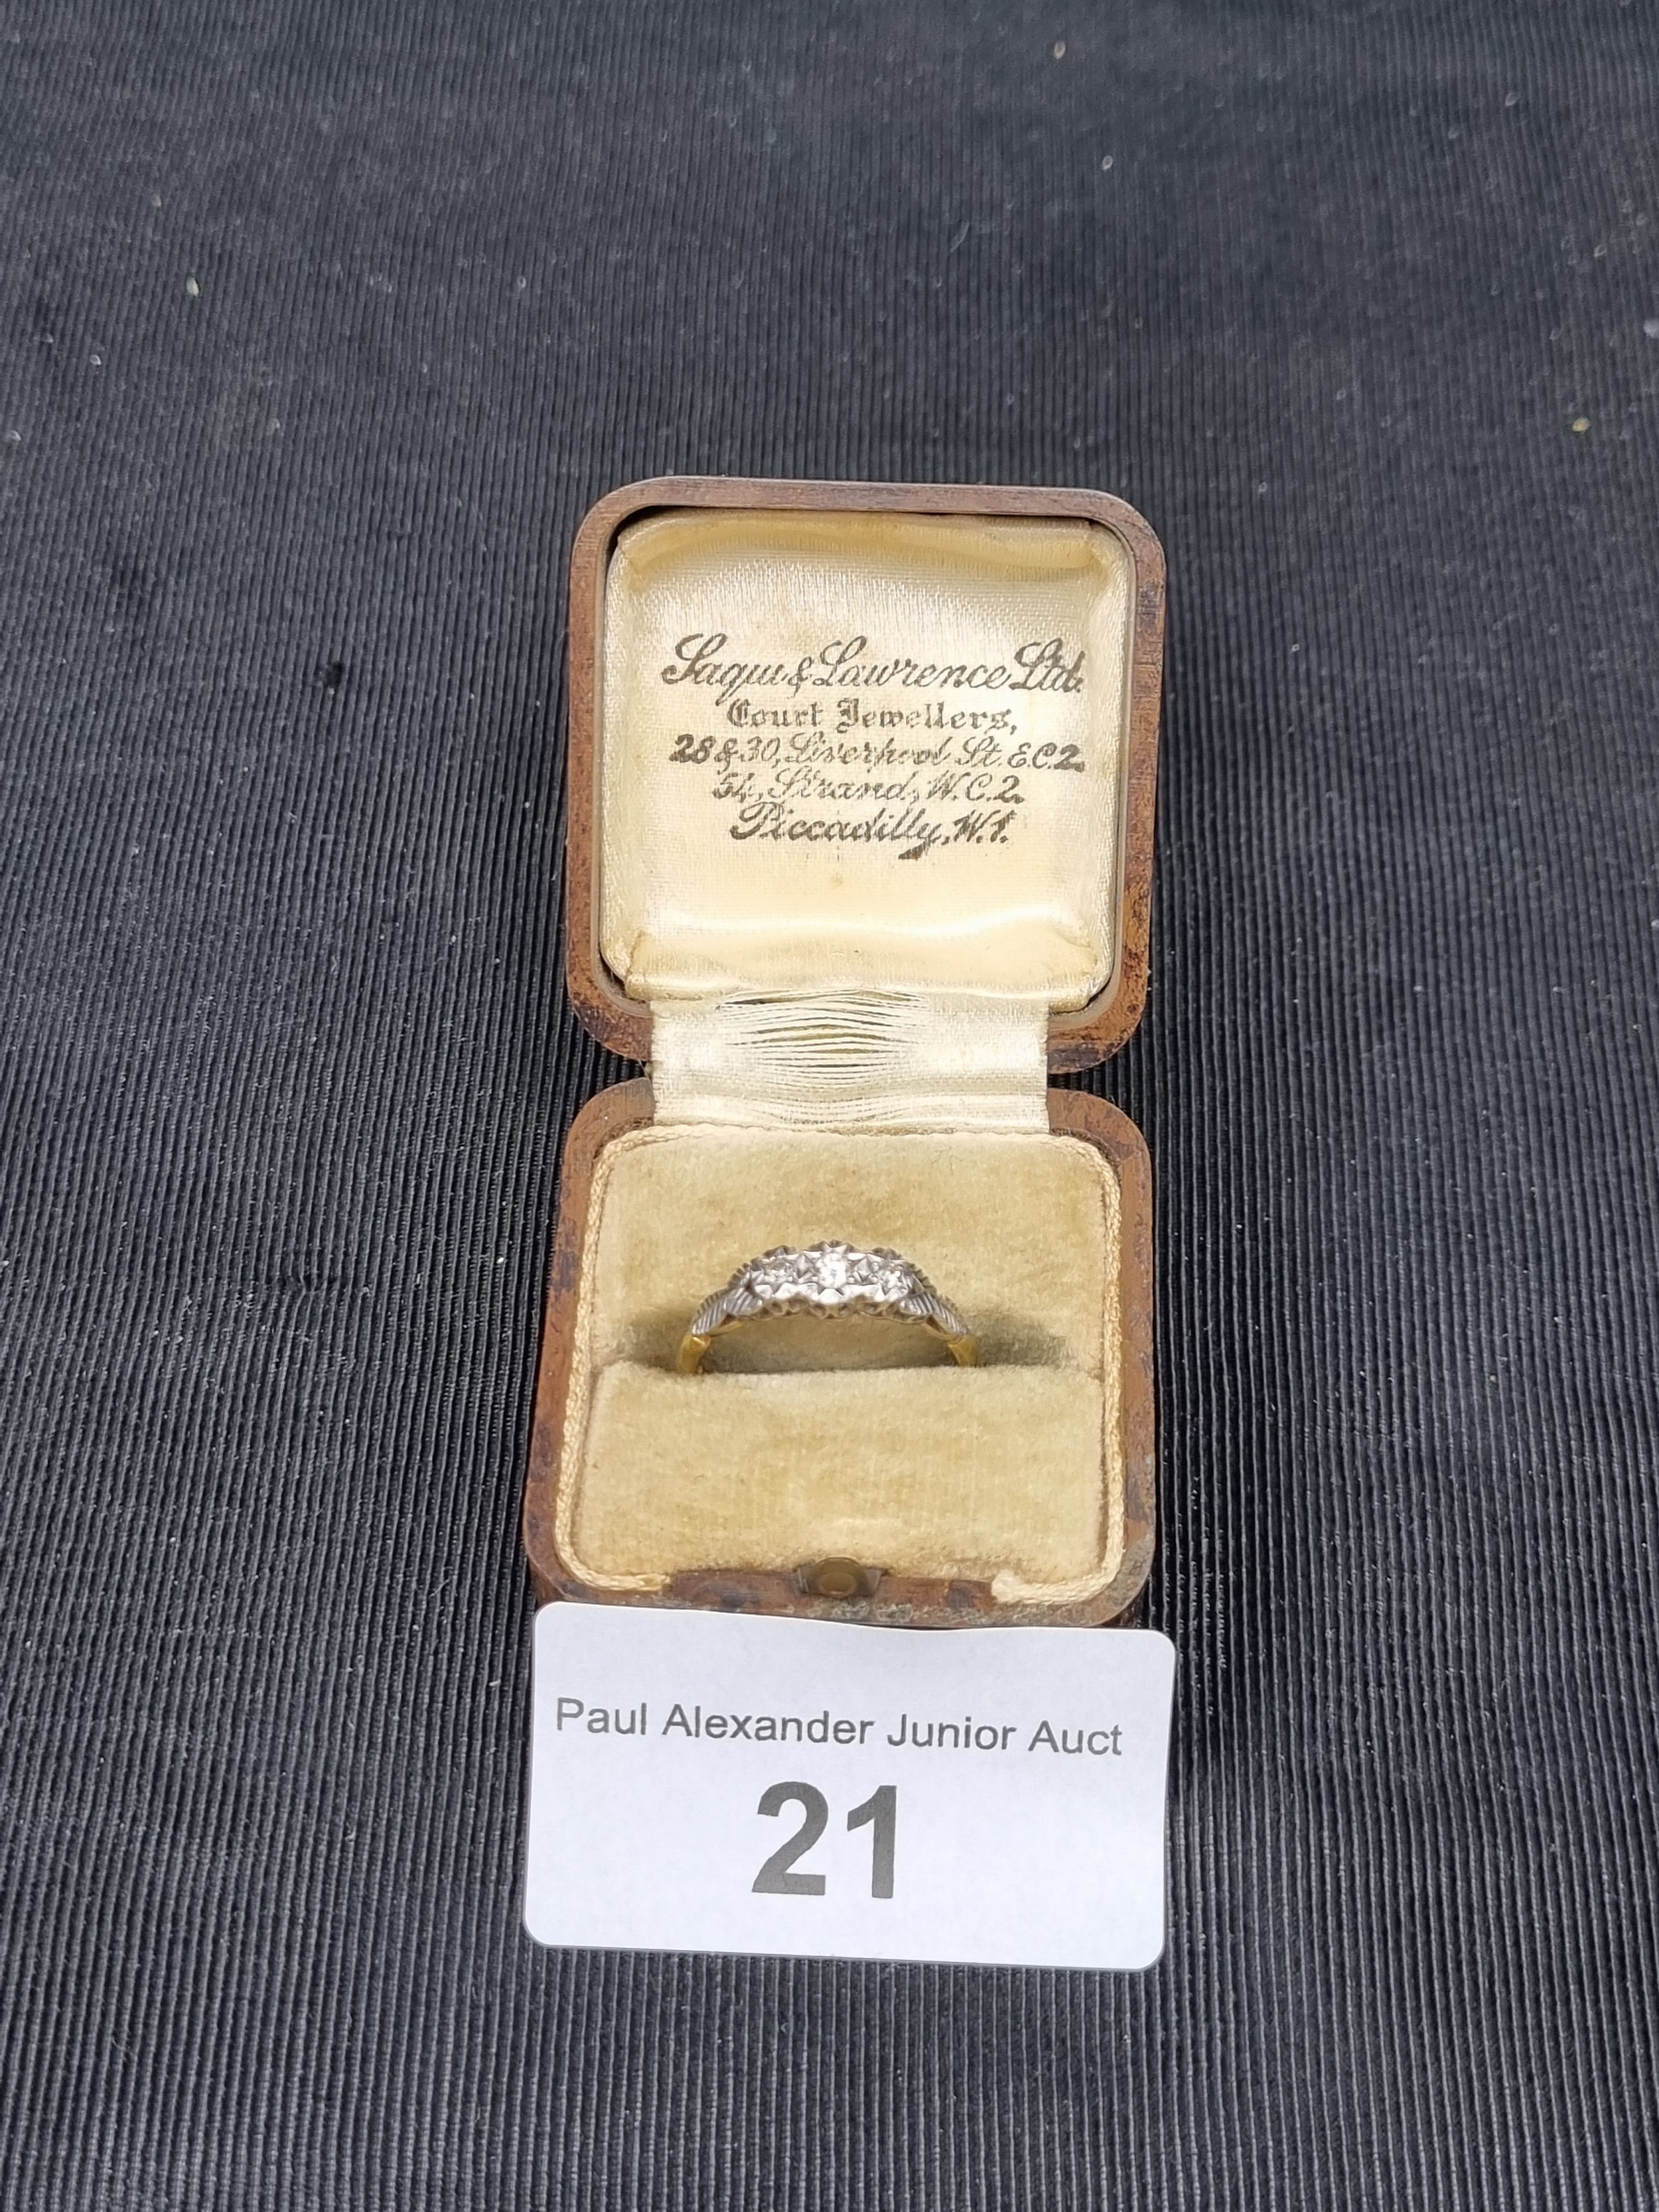 Beautiful diamond set 9ct gold vintage engagement or eternity ring. - Image 3 of 3